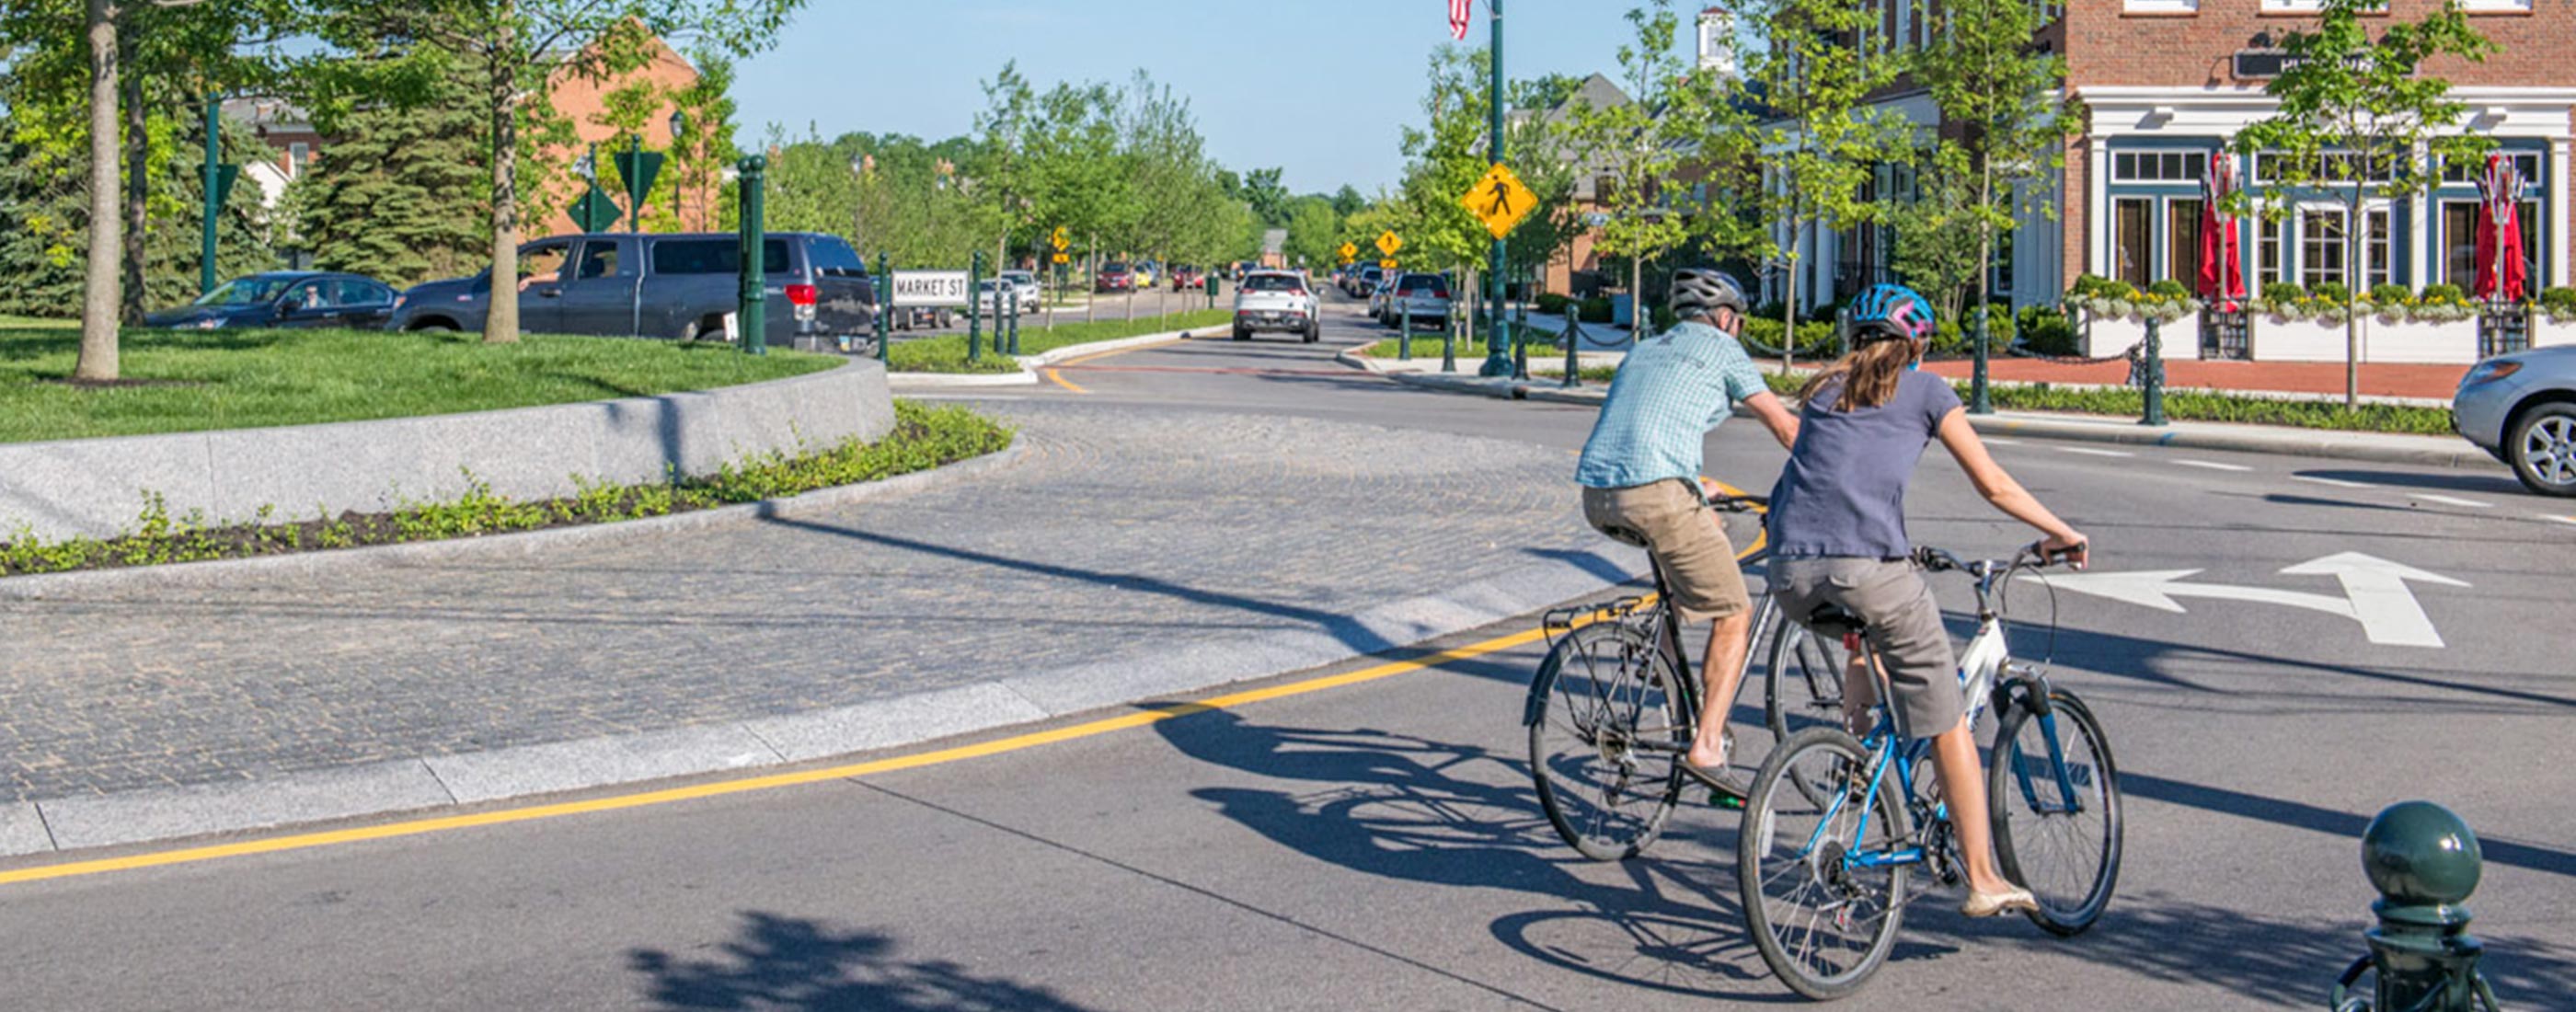 New Albany, Ohio’s central roundabout, designed by OHM Advisors, provides safe bike lanes.